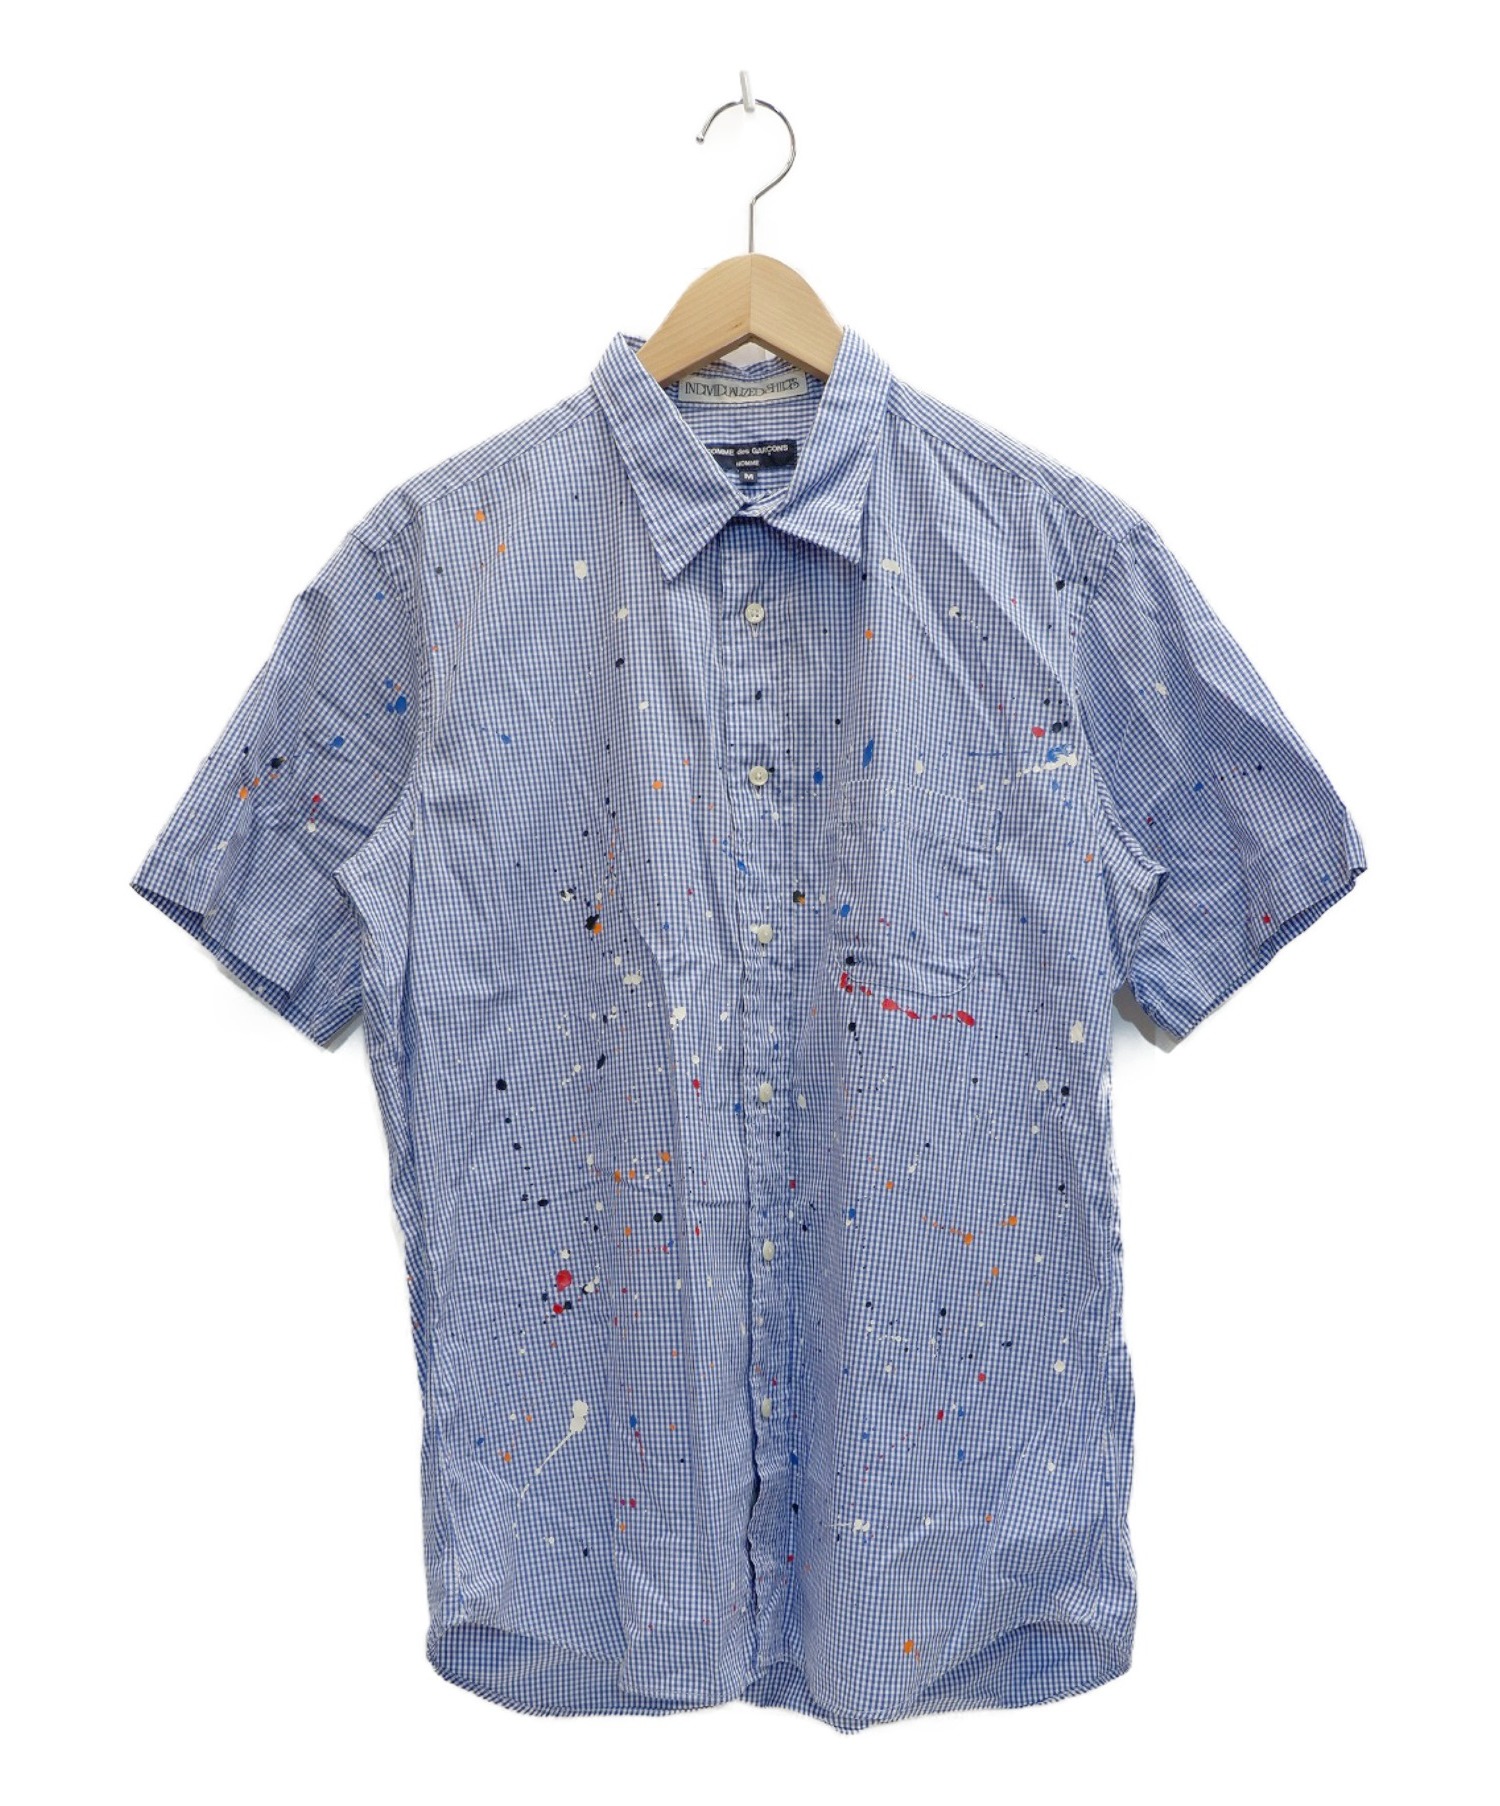 COMME des GARCONS HOMME×INDIVIDUALIZED SHIRTS 綿ブロードドリップシャツ ホワイト×ブルー サイズ:M  HO-B004 AD2014 ペイント加工